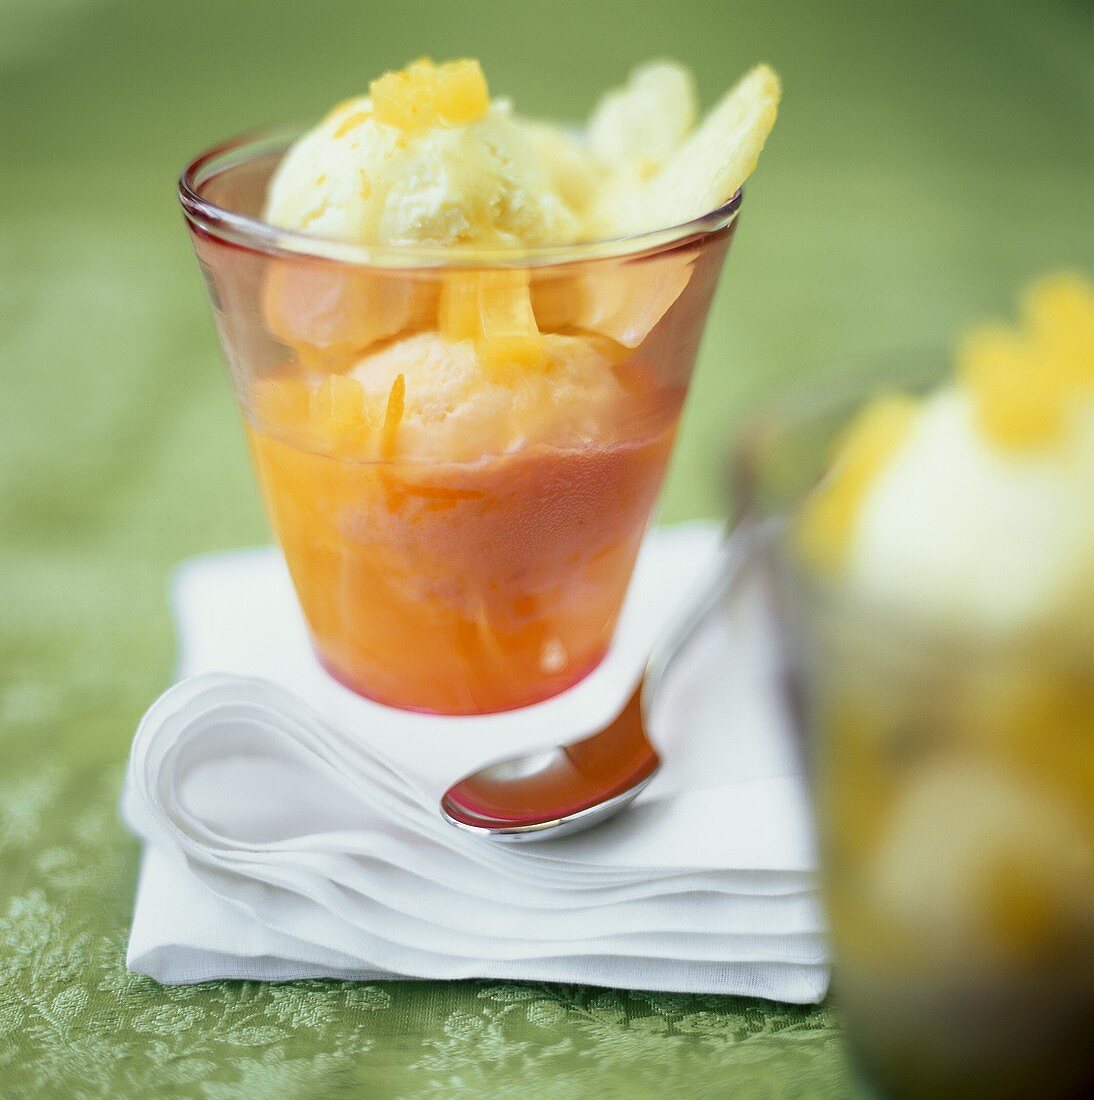 Orange and kumquat ice cream in a sundae glass